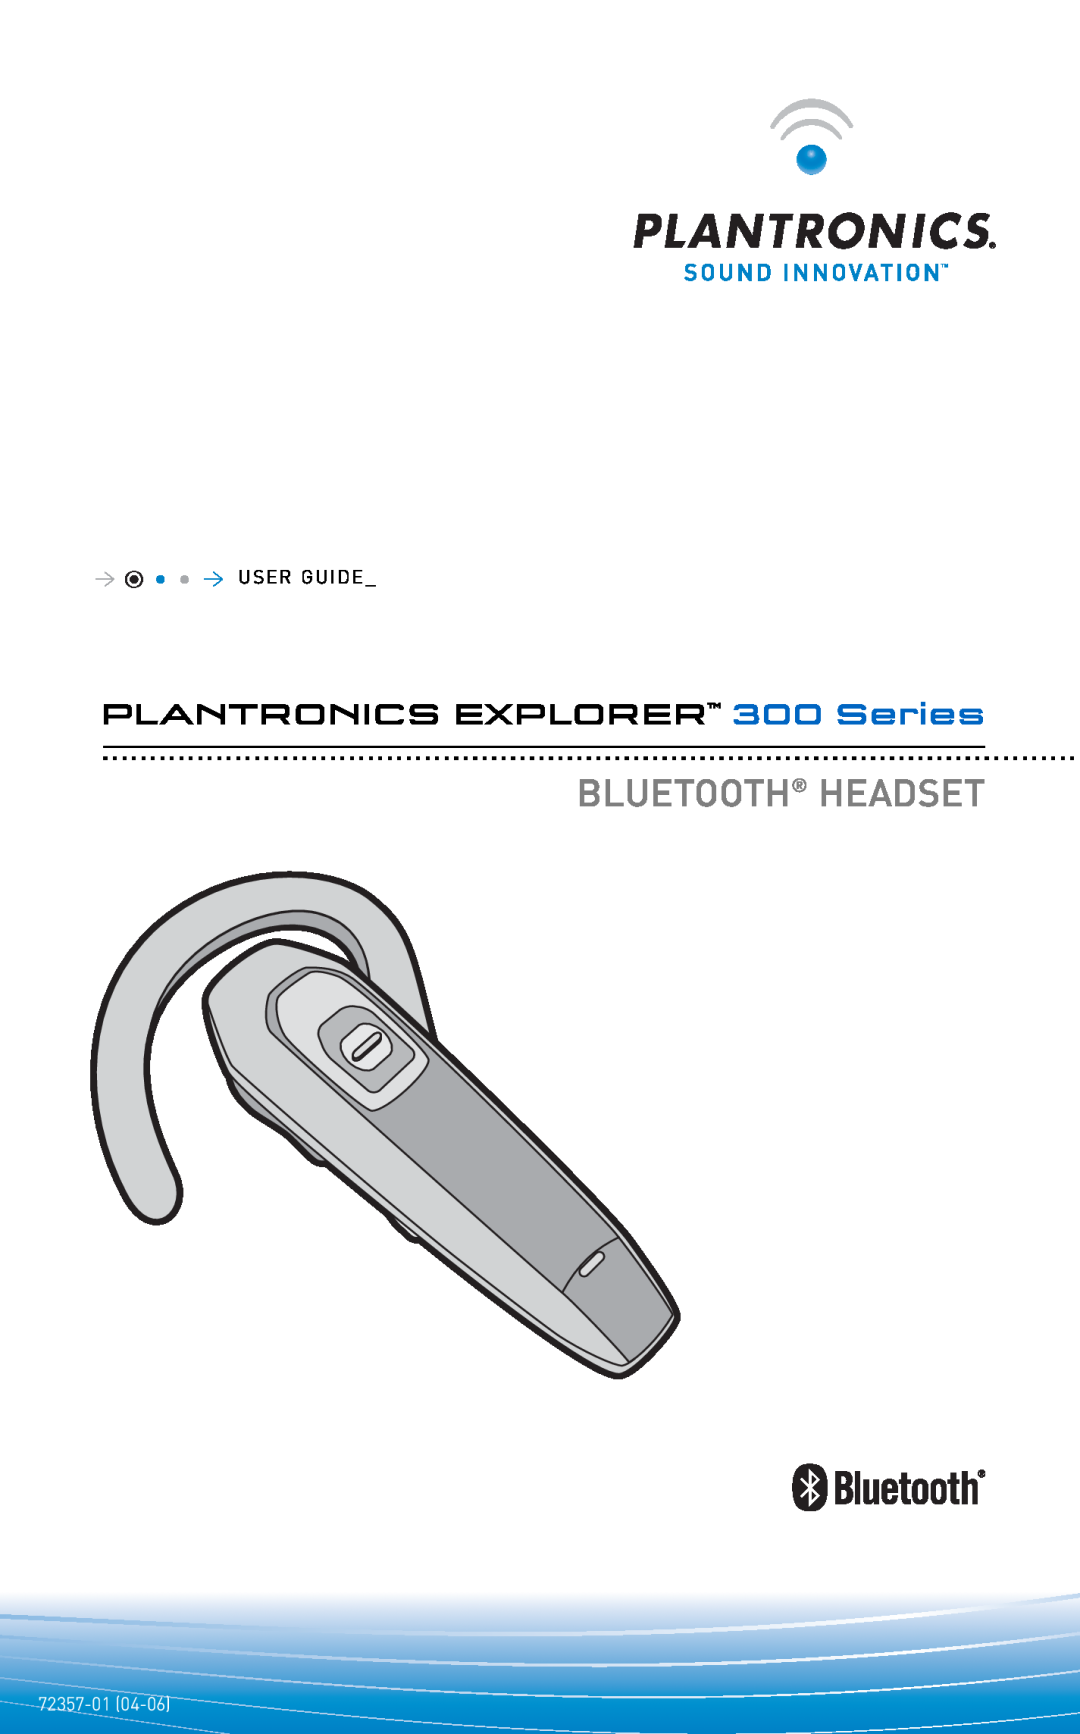 Plantronics manual Bluetooth Headset, PLANTRONICS EXPLORER 300 Series, 72357-01 